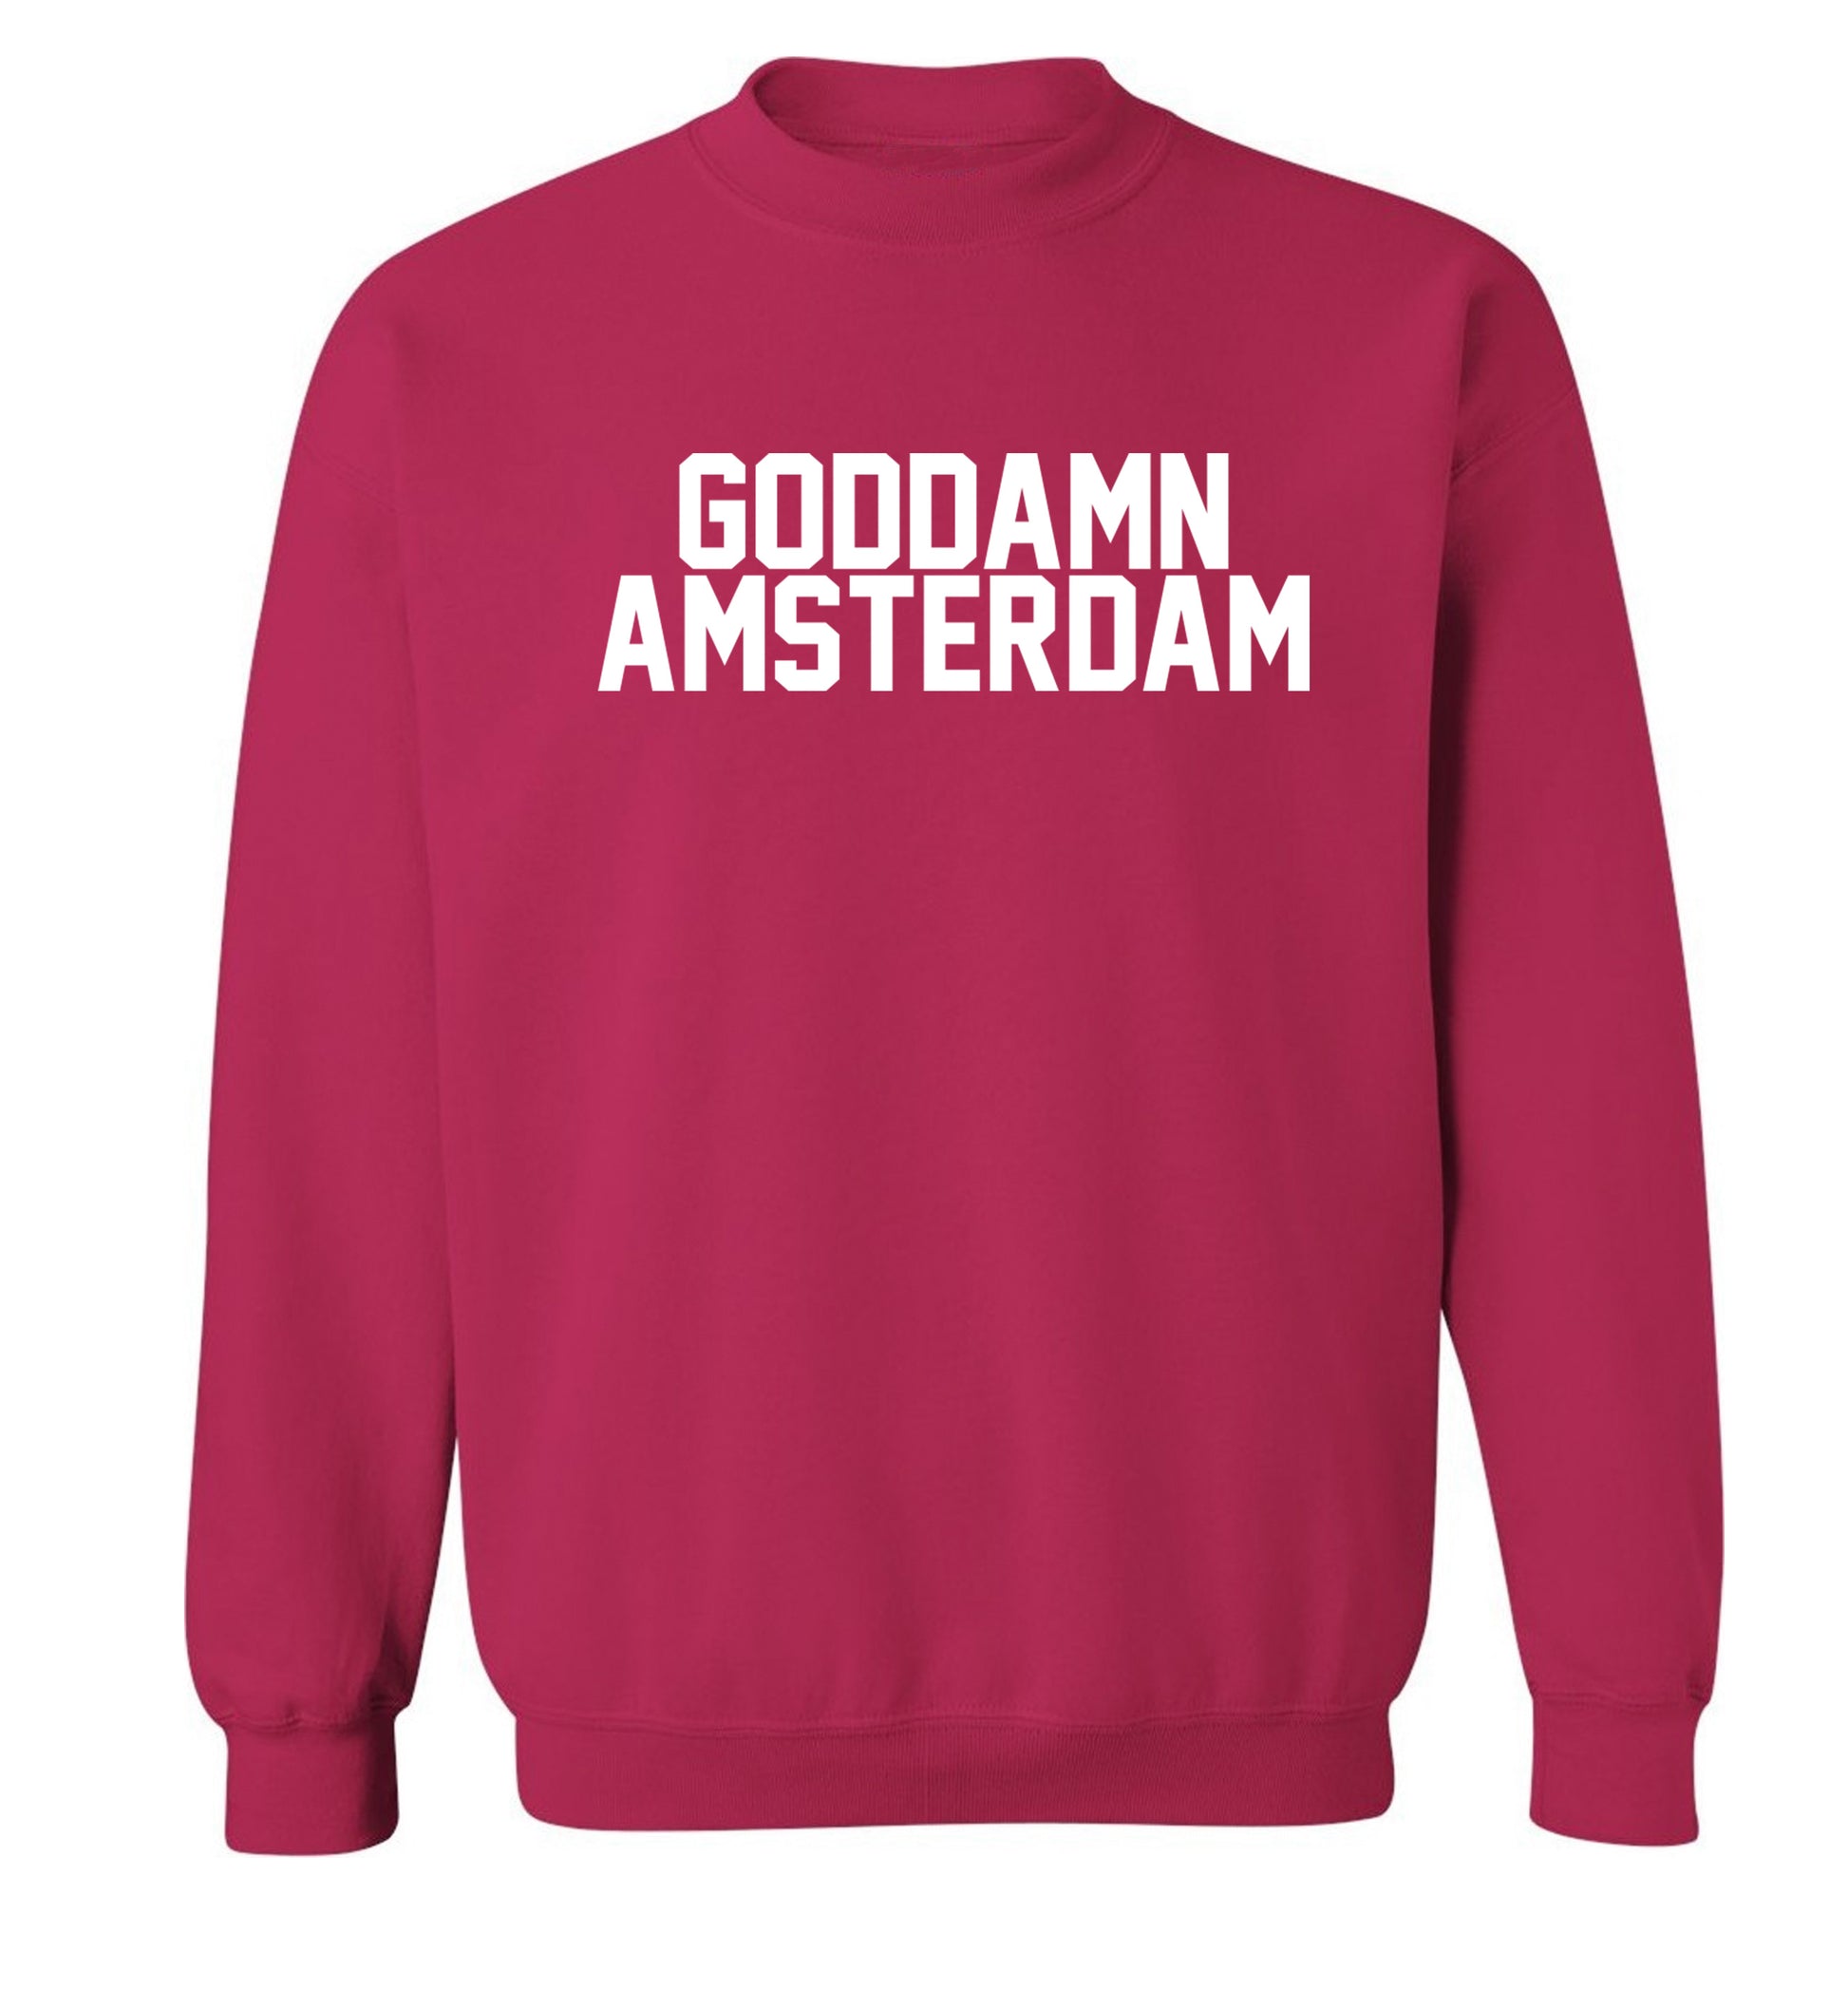 Goddamn Amsterdam Adult's unisex pink Sweater 2XL